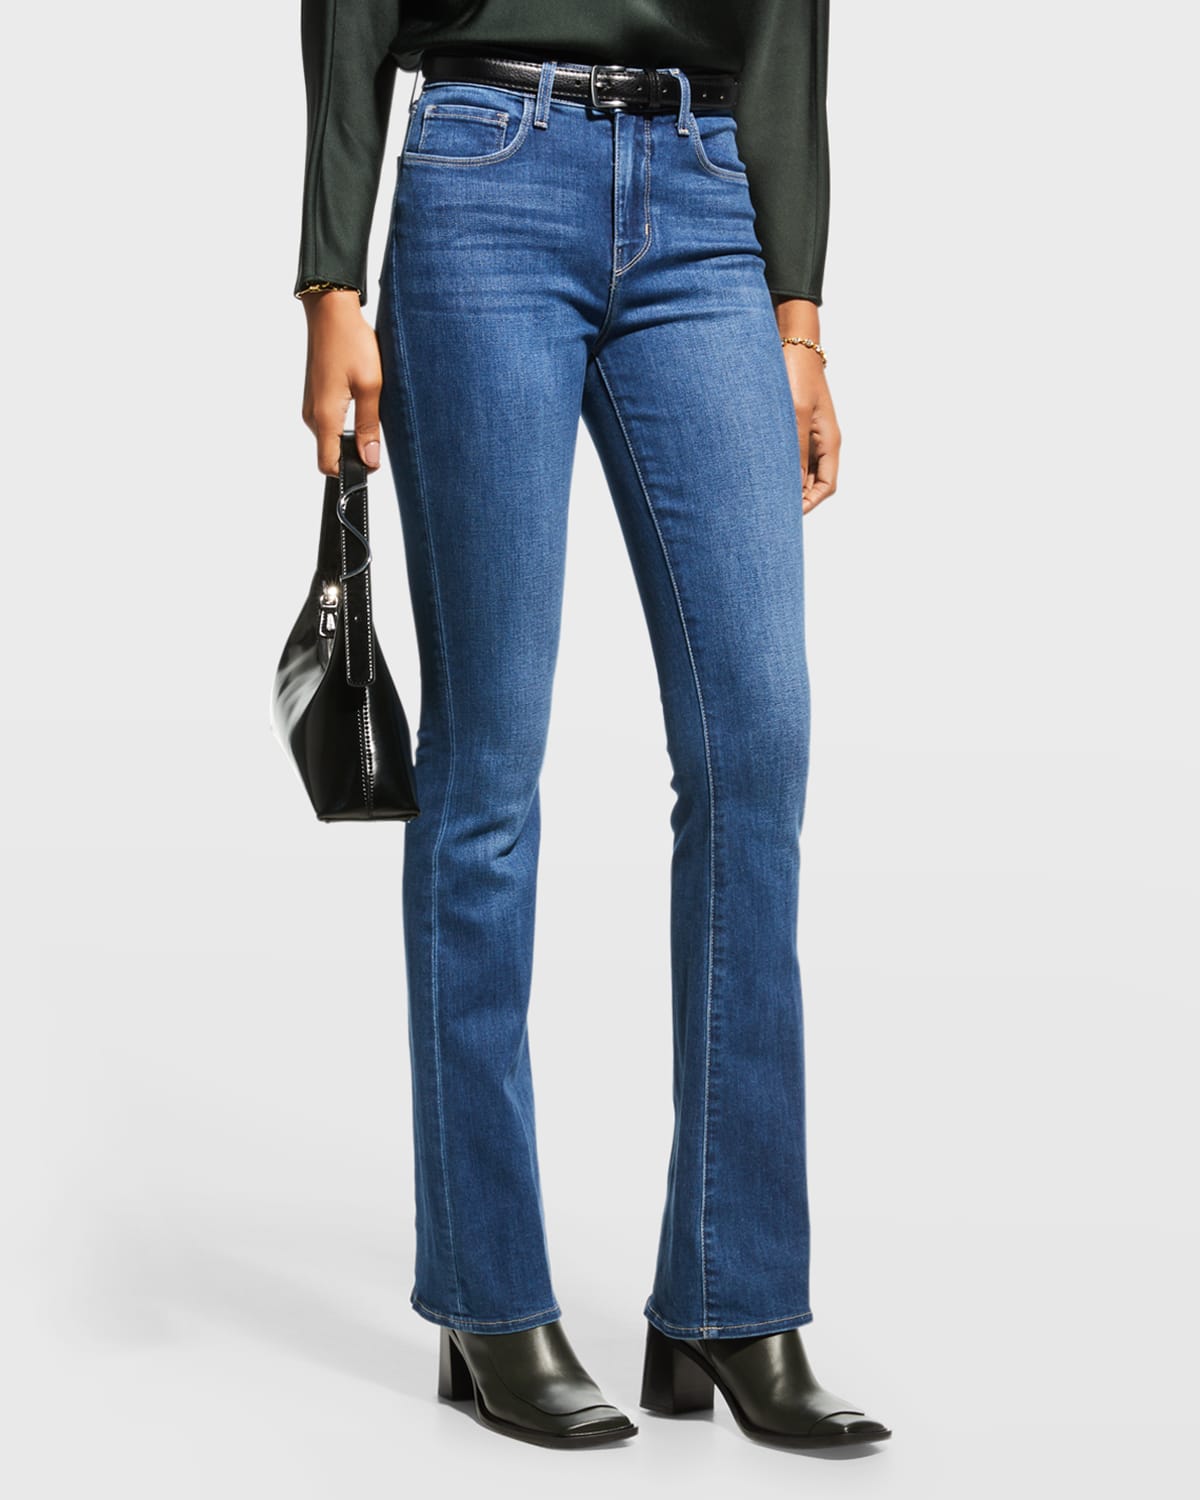 L'Agence Selma High-Rise Sleek Baby Boot Jeans